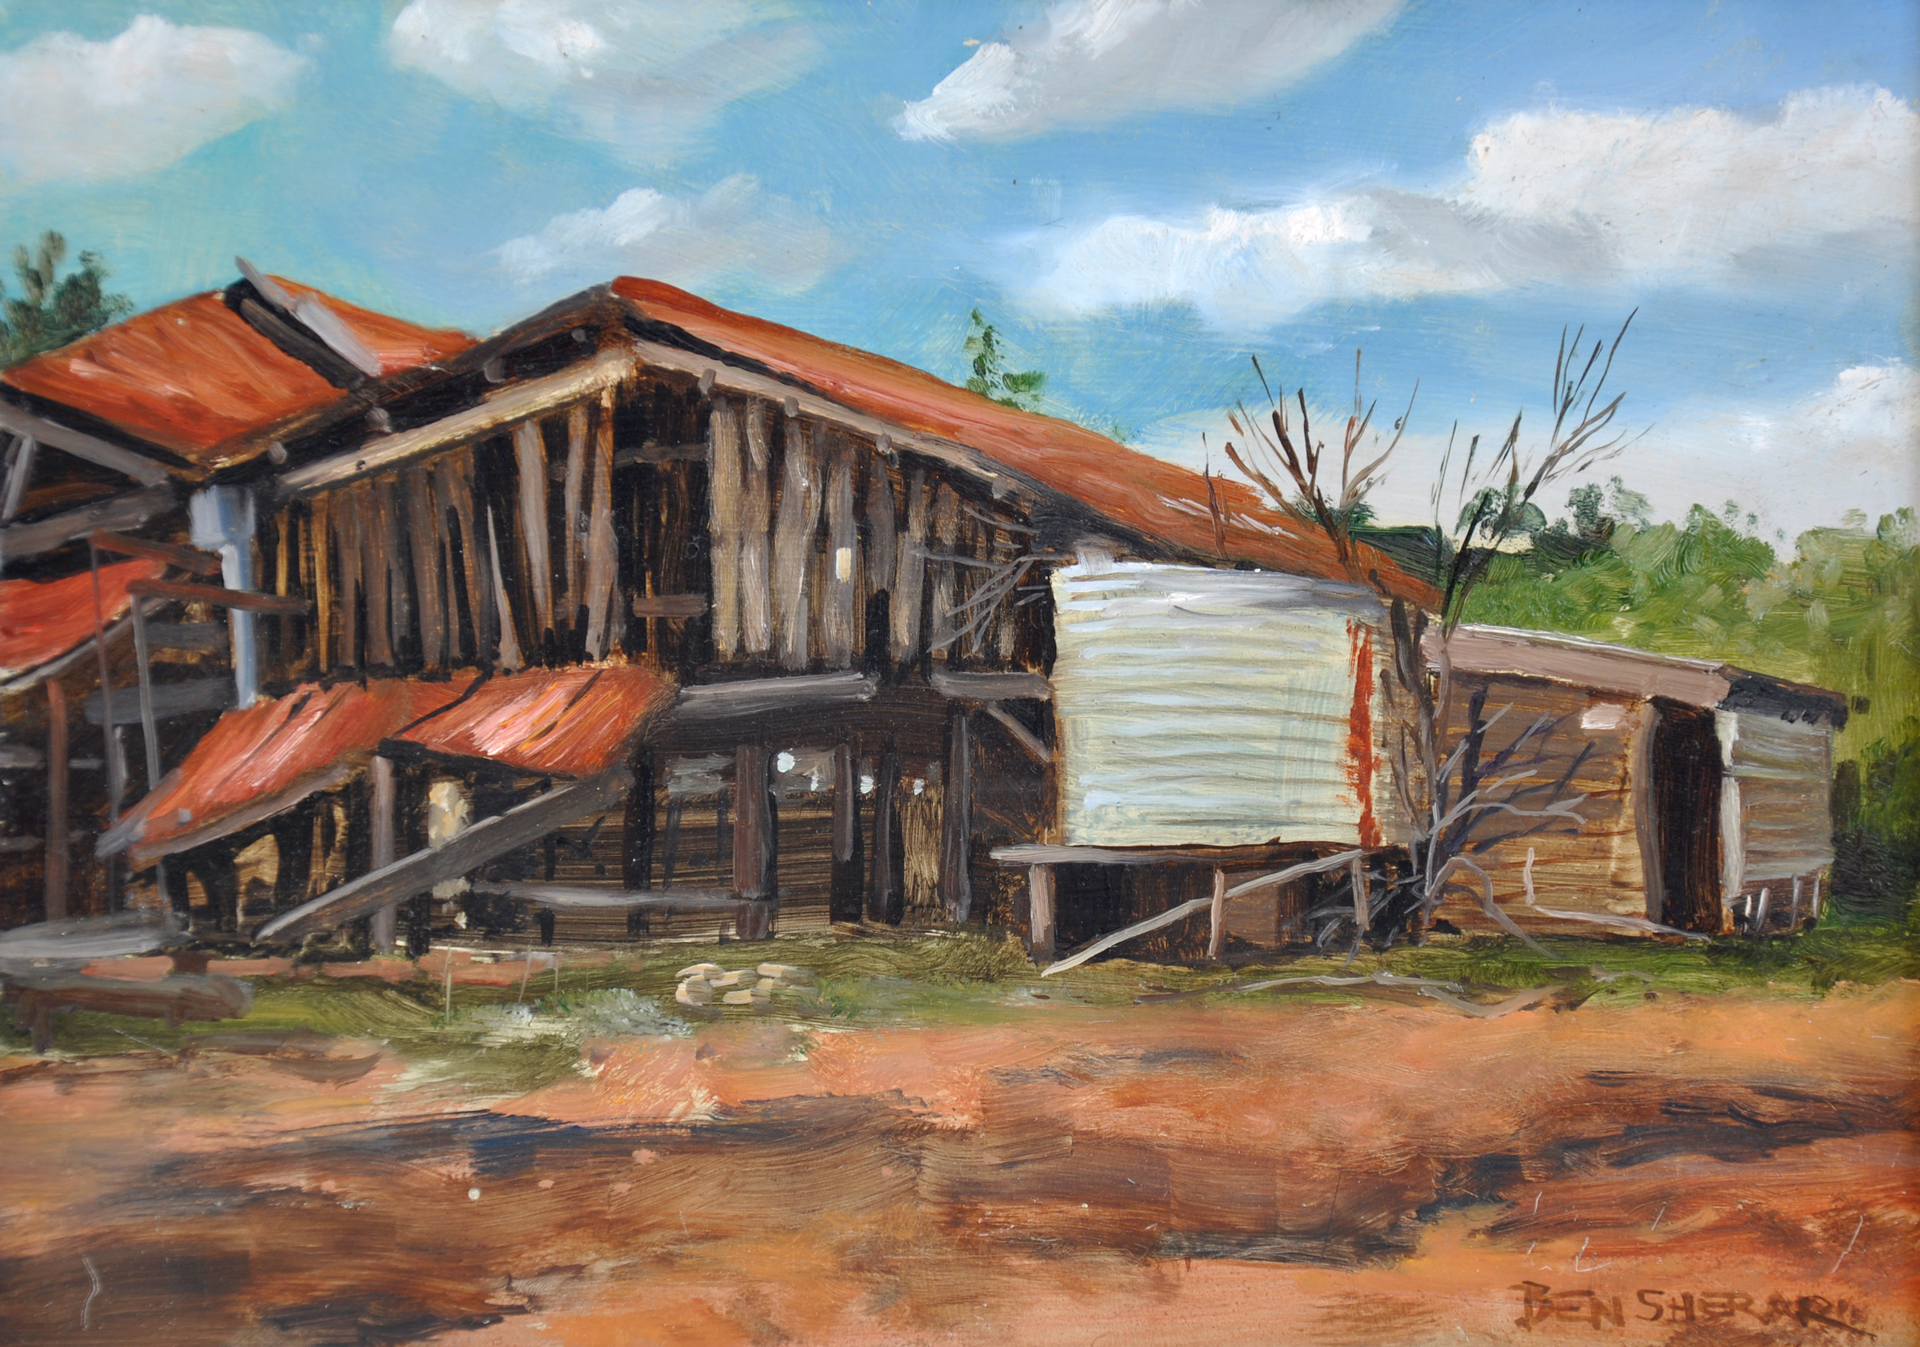 49. Ben Sherar, Old Timber Mill $310